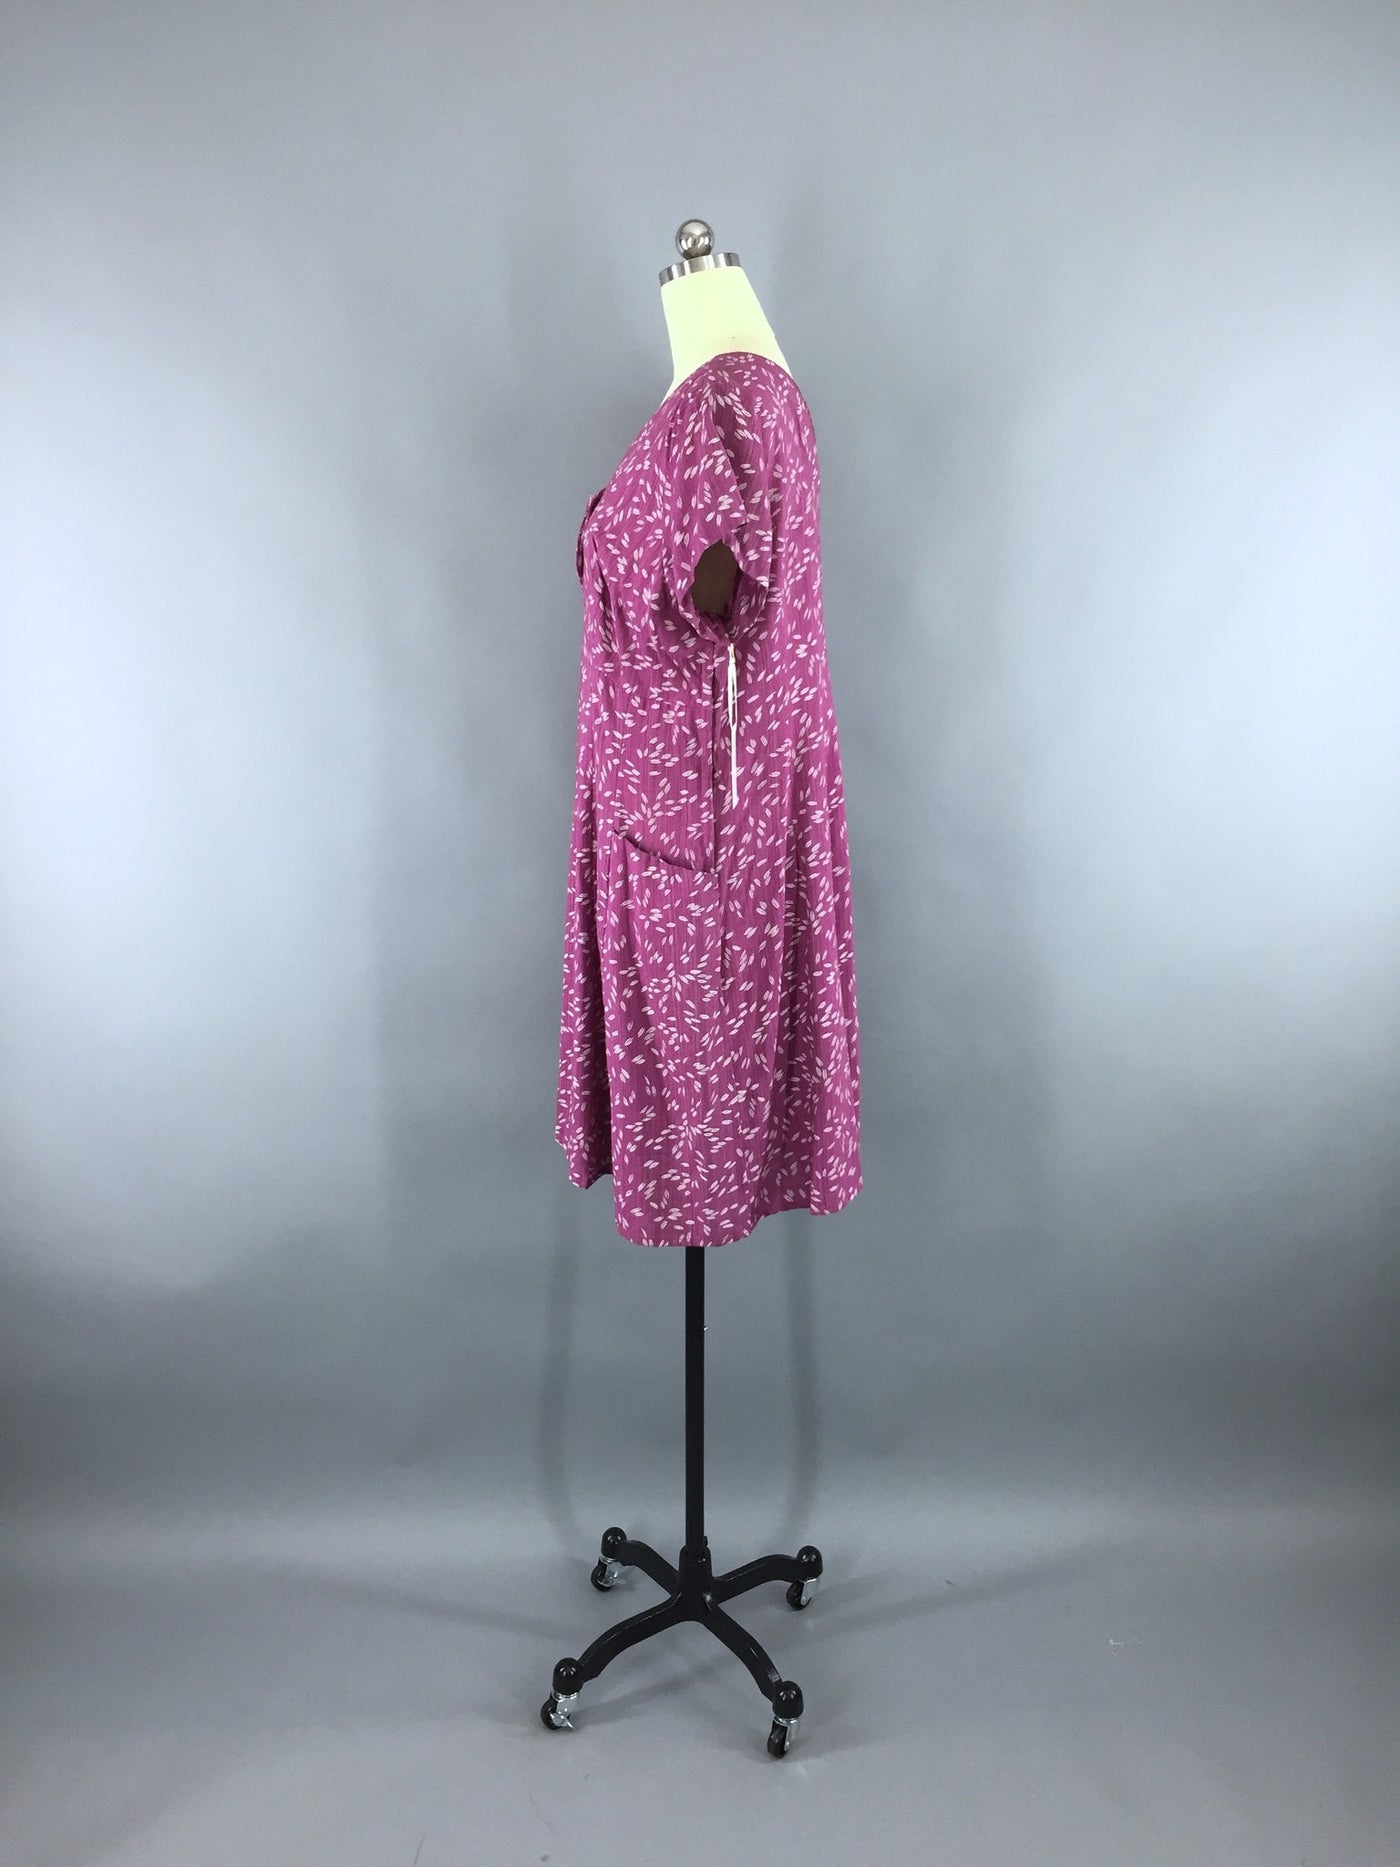 Vintage 1940s Day Dress / Purple Novelty Print Cotton - ThisBlueBird